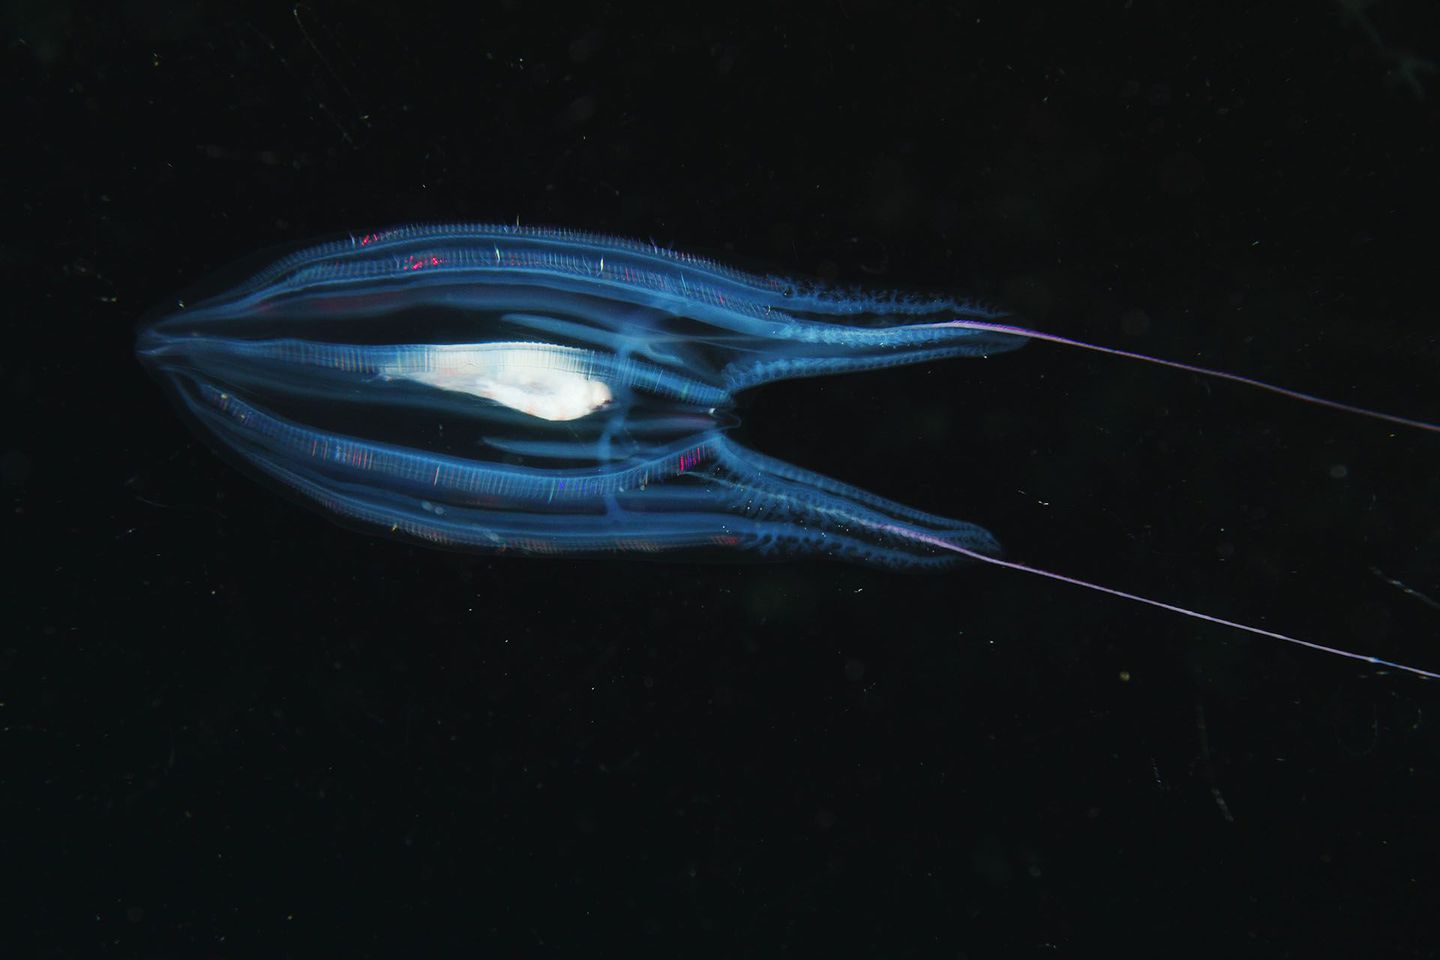 http-%2f%2fmashable-com%2fwp-content%2fgallery%2fbioluminescent-sea-creatures%2f42-44657438